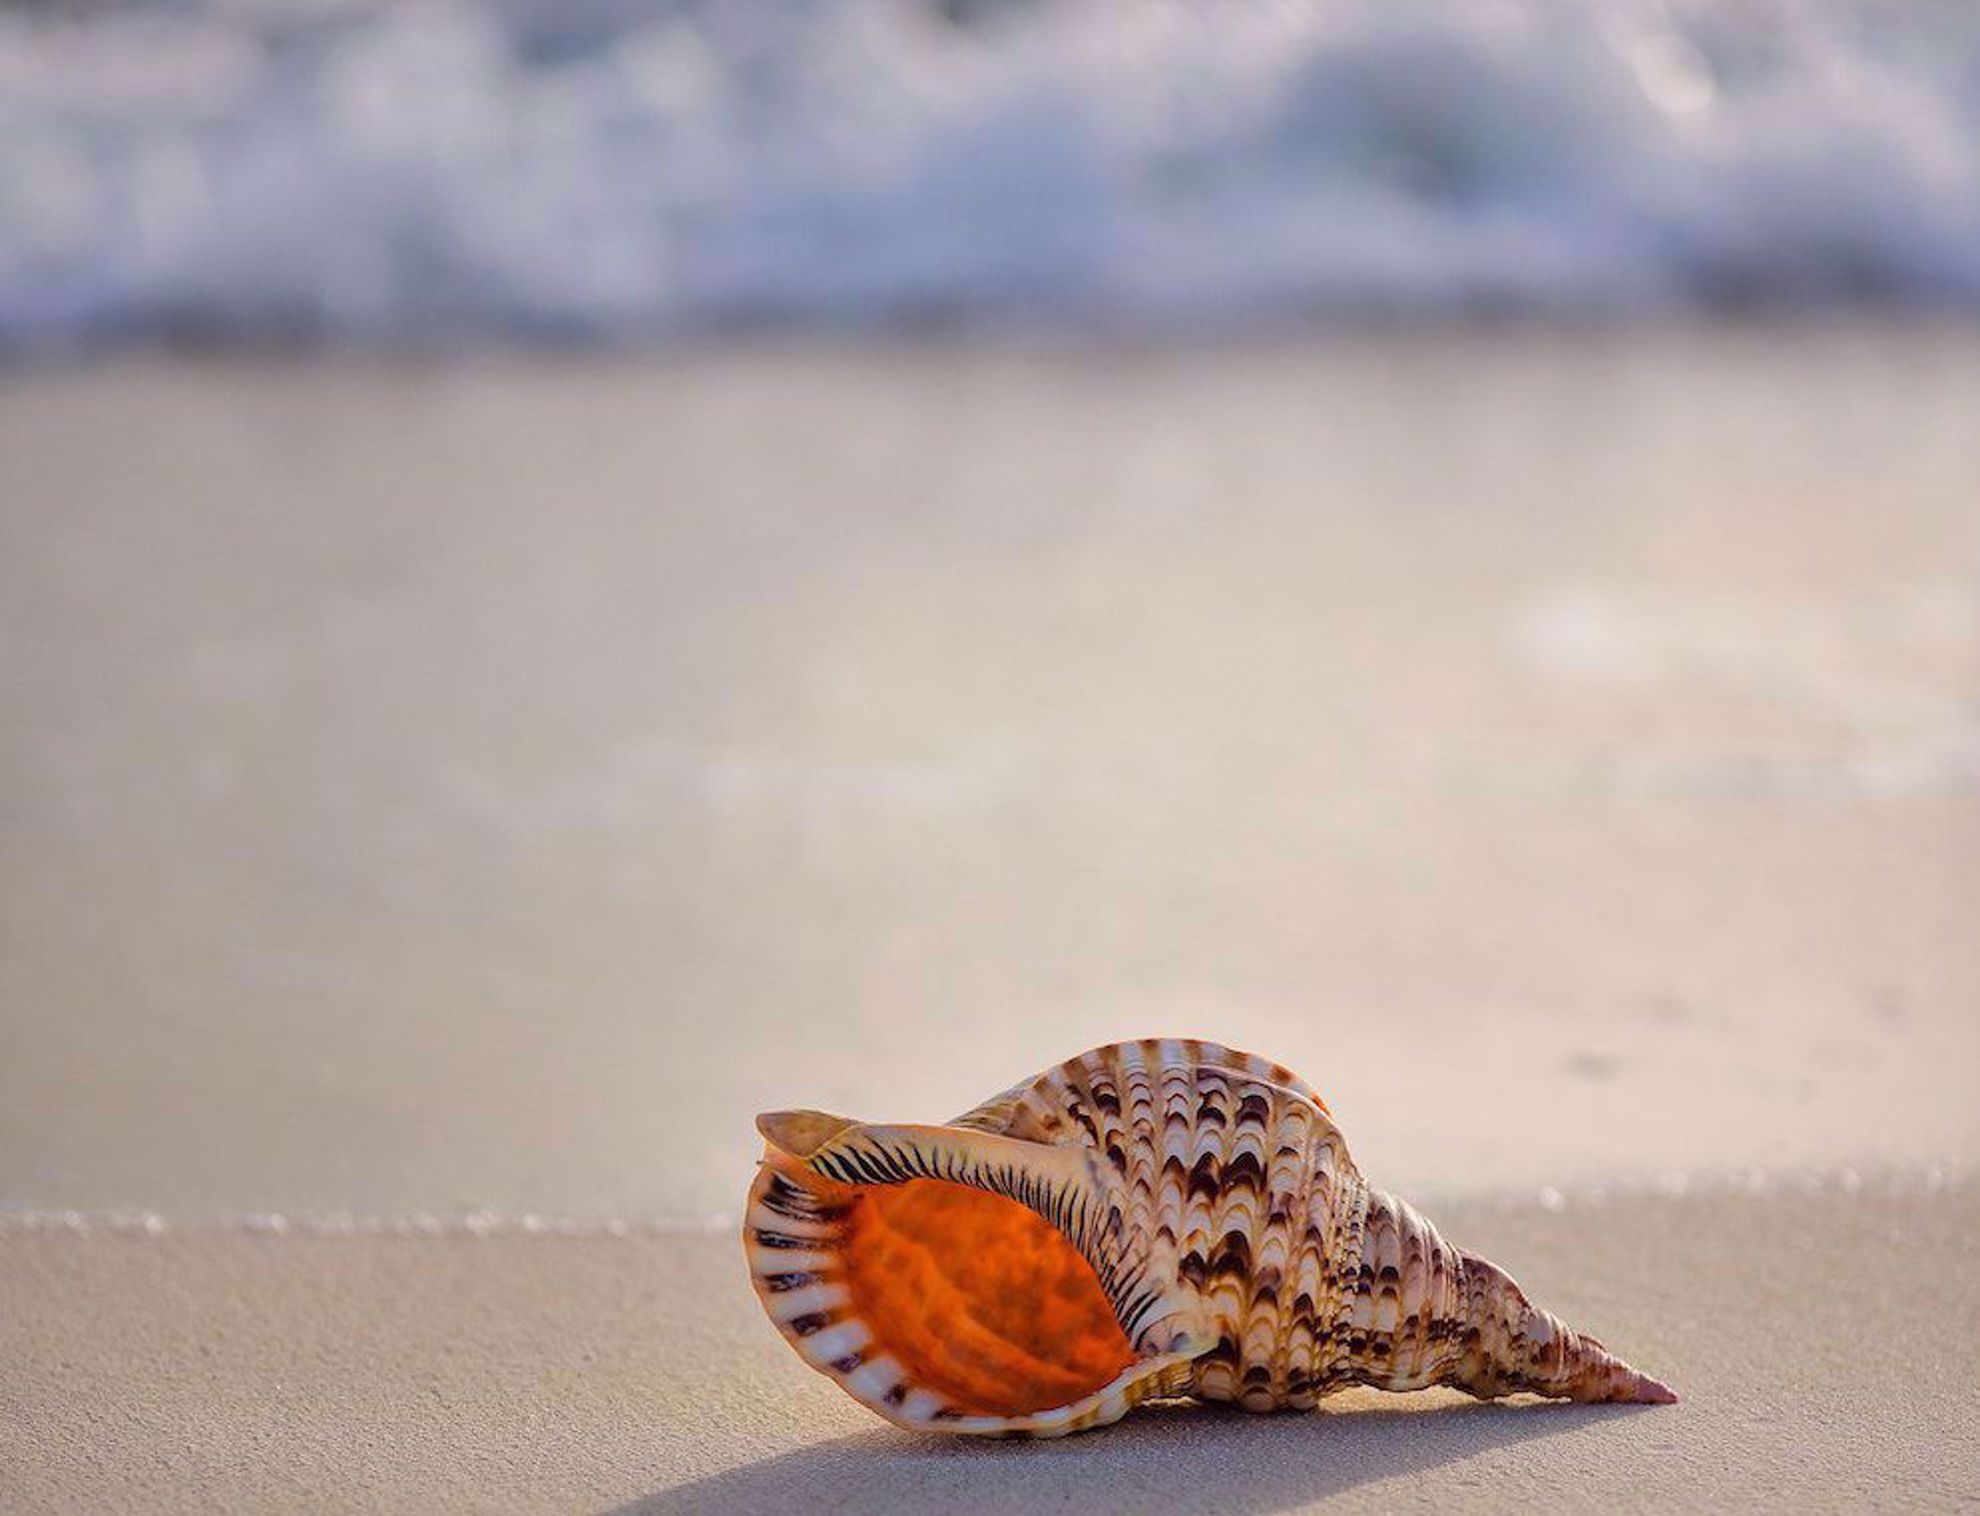 Seashell on the shore